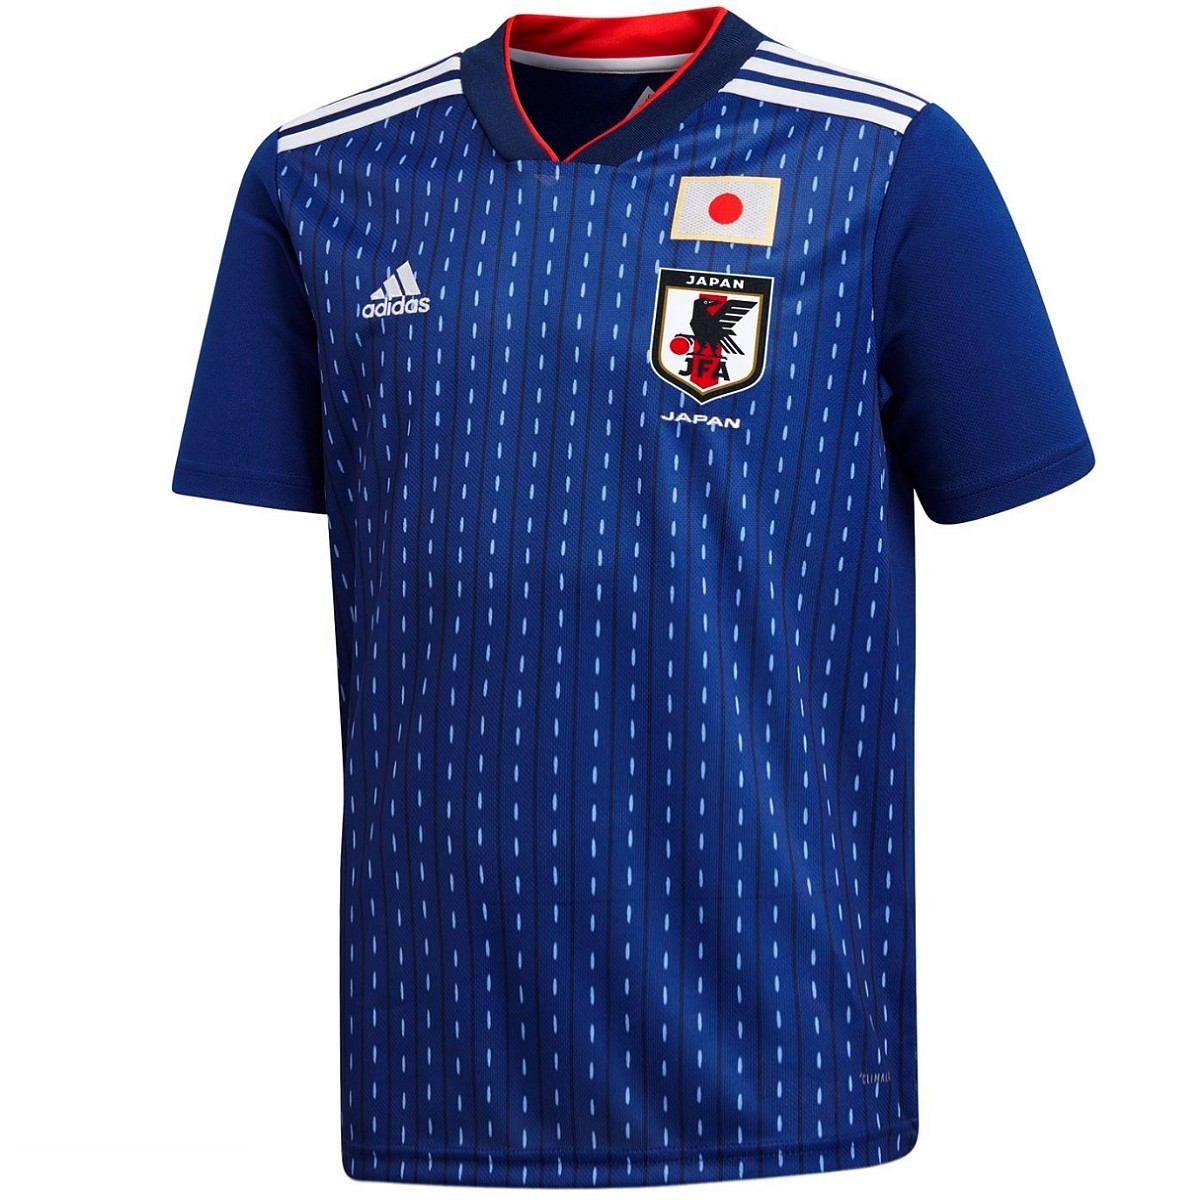 japan national football team jersey